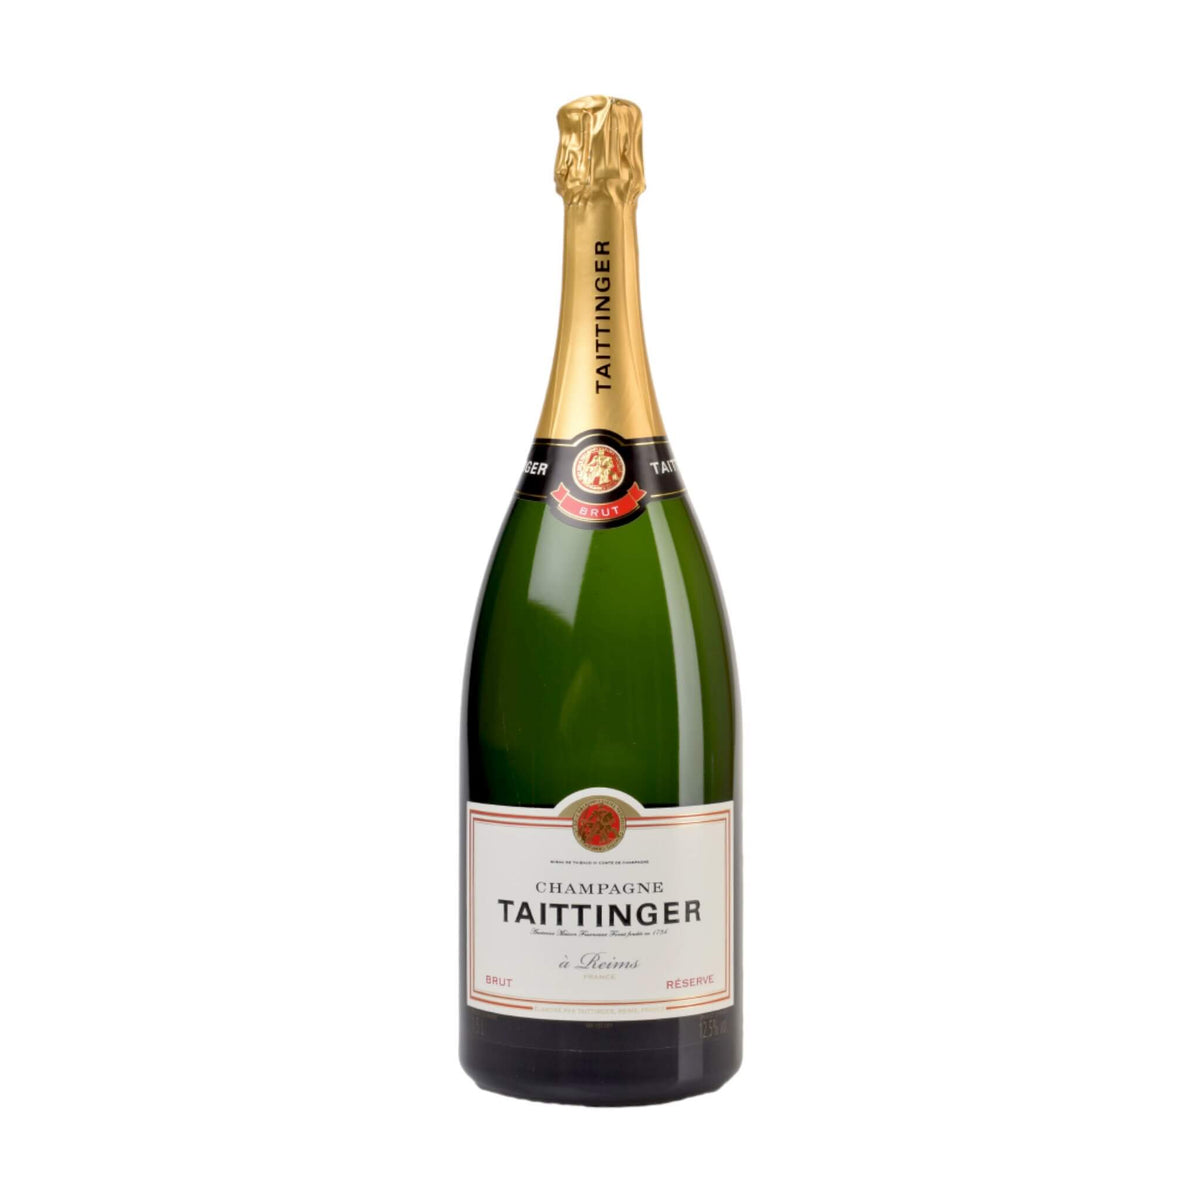 Champagne Taittinger-Champagner-Chardonnay, Pinot Noir-Taittinger Brut Reserve Magnum-WINECOM